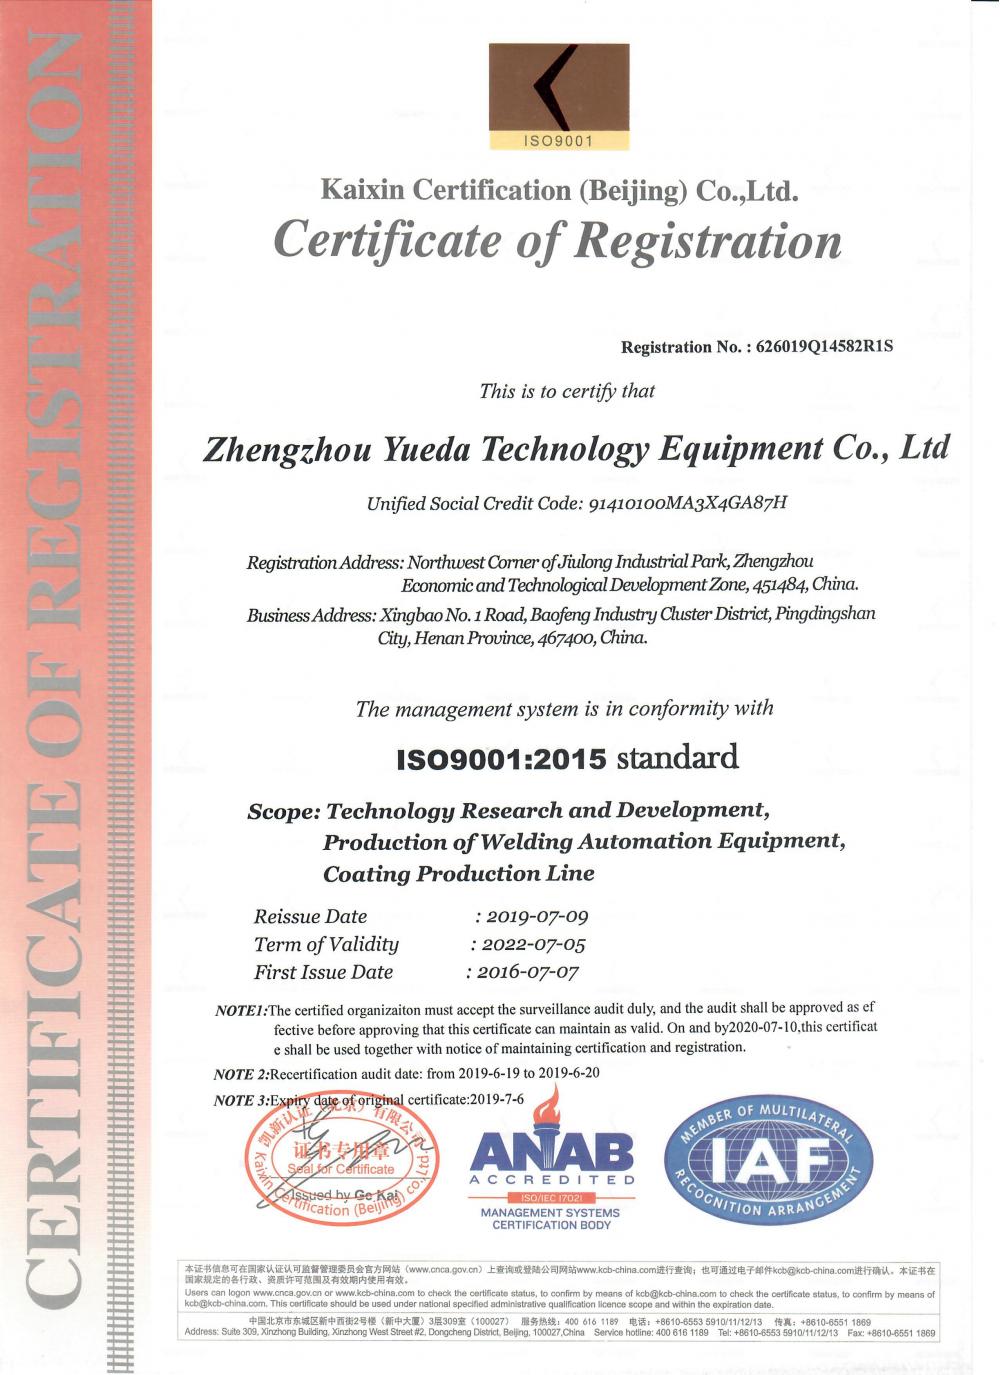 Kaixin Certification(Beijing) Co, Ltd. Certificate of Registration